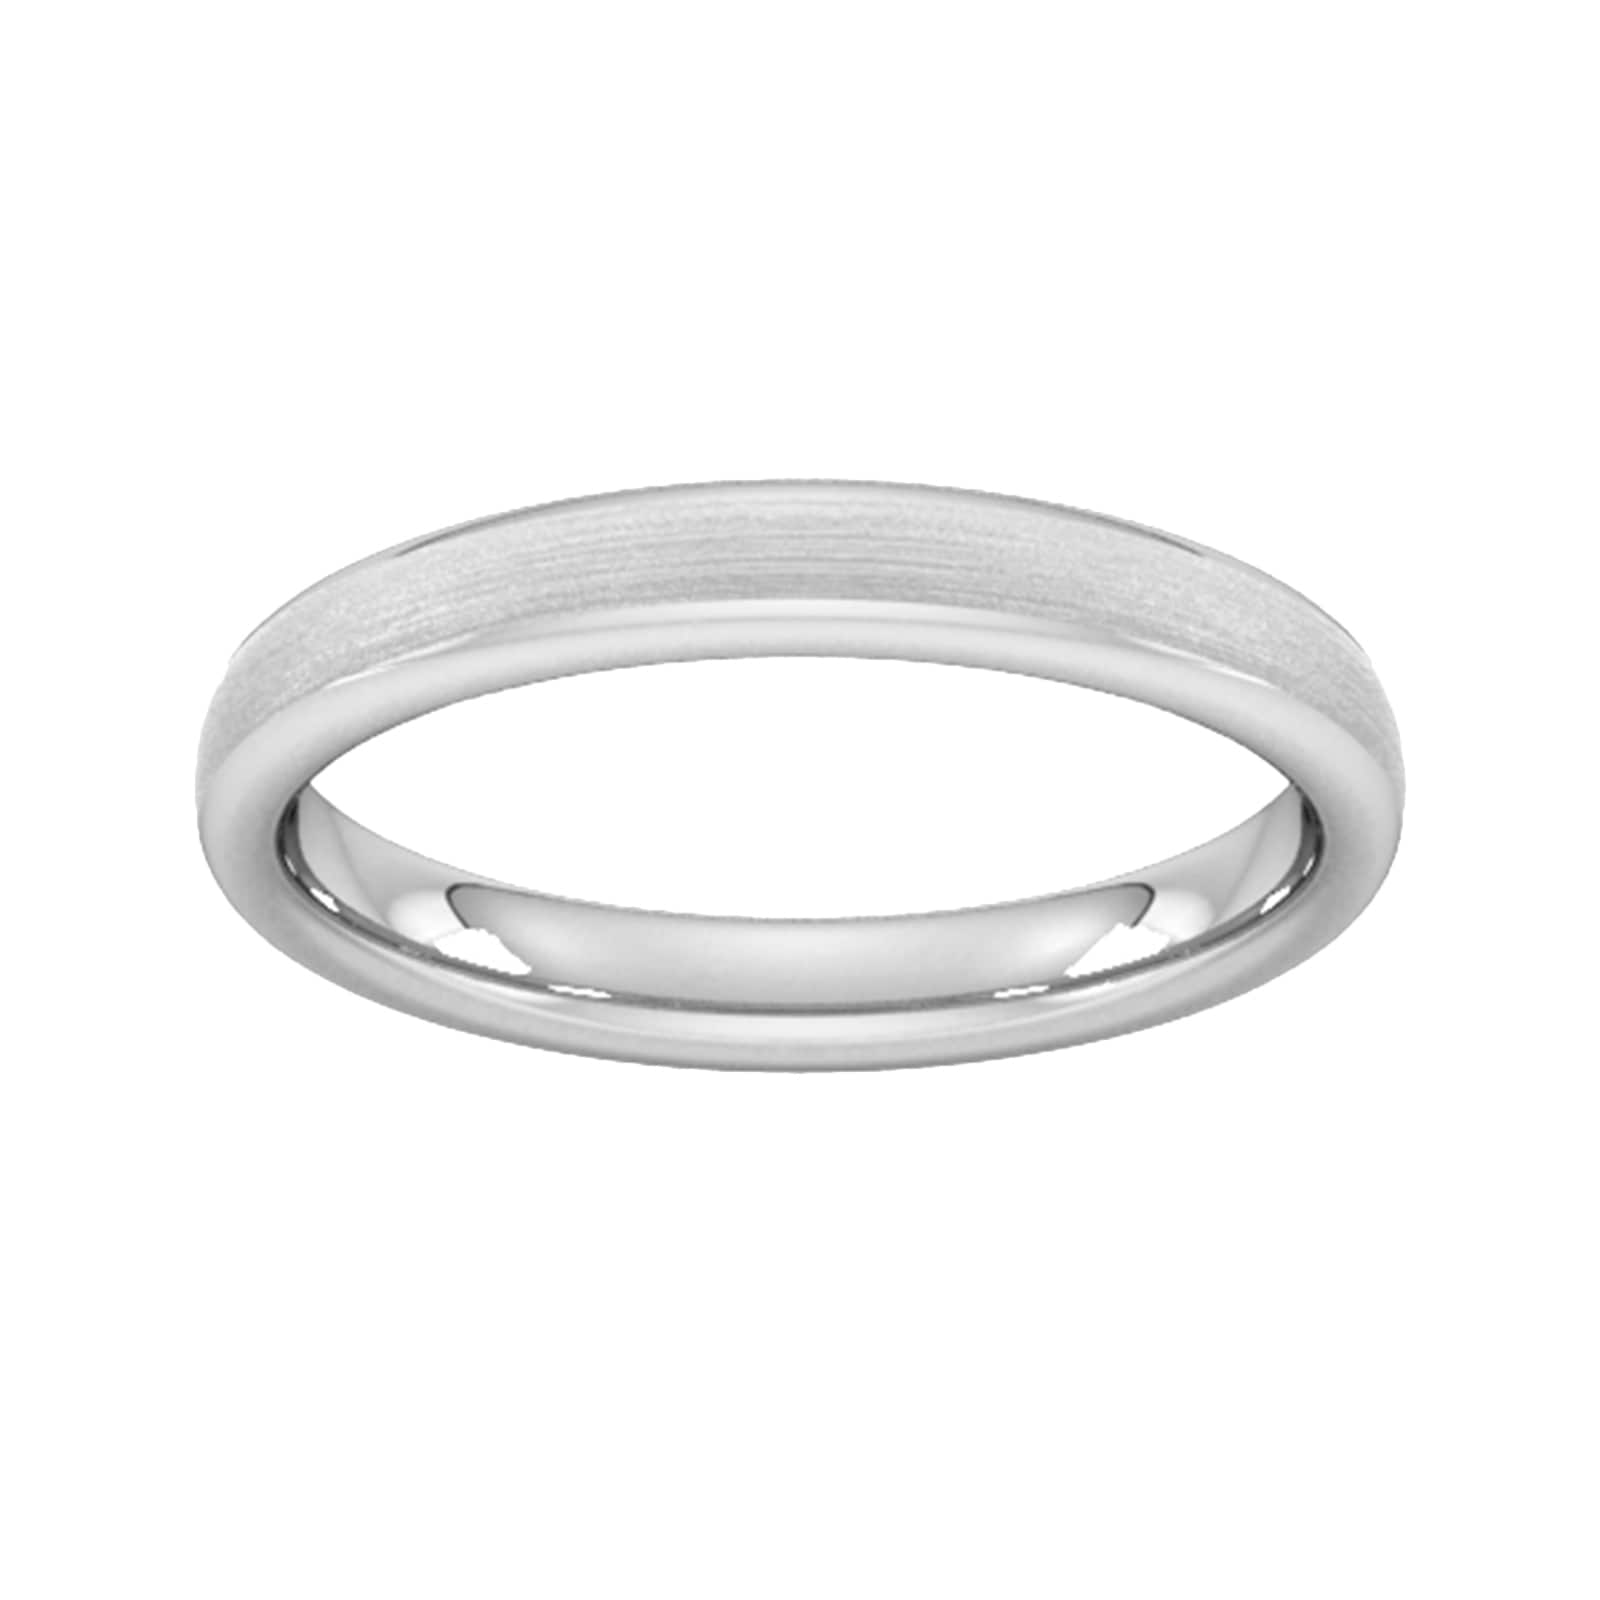 3mm D Shape Standard Matt Finished Wedding Ring In 9 Carat White Gold - Ring Size R